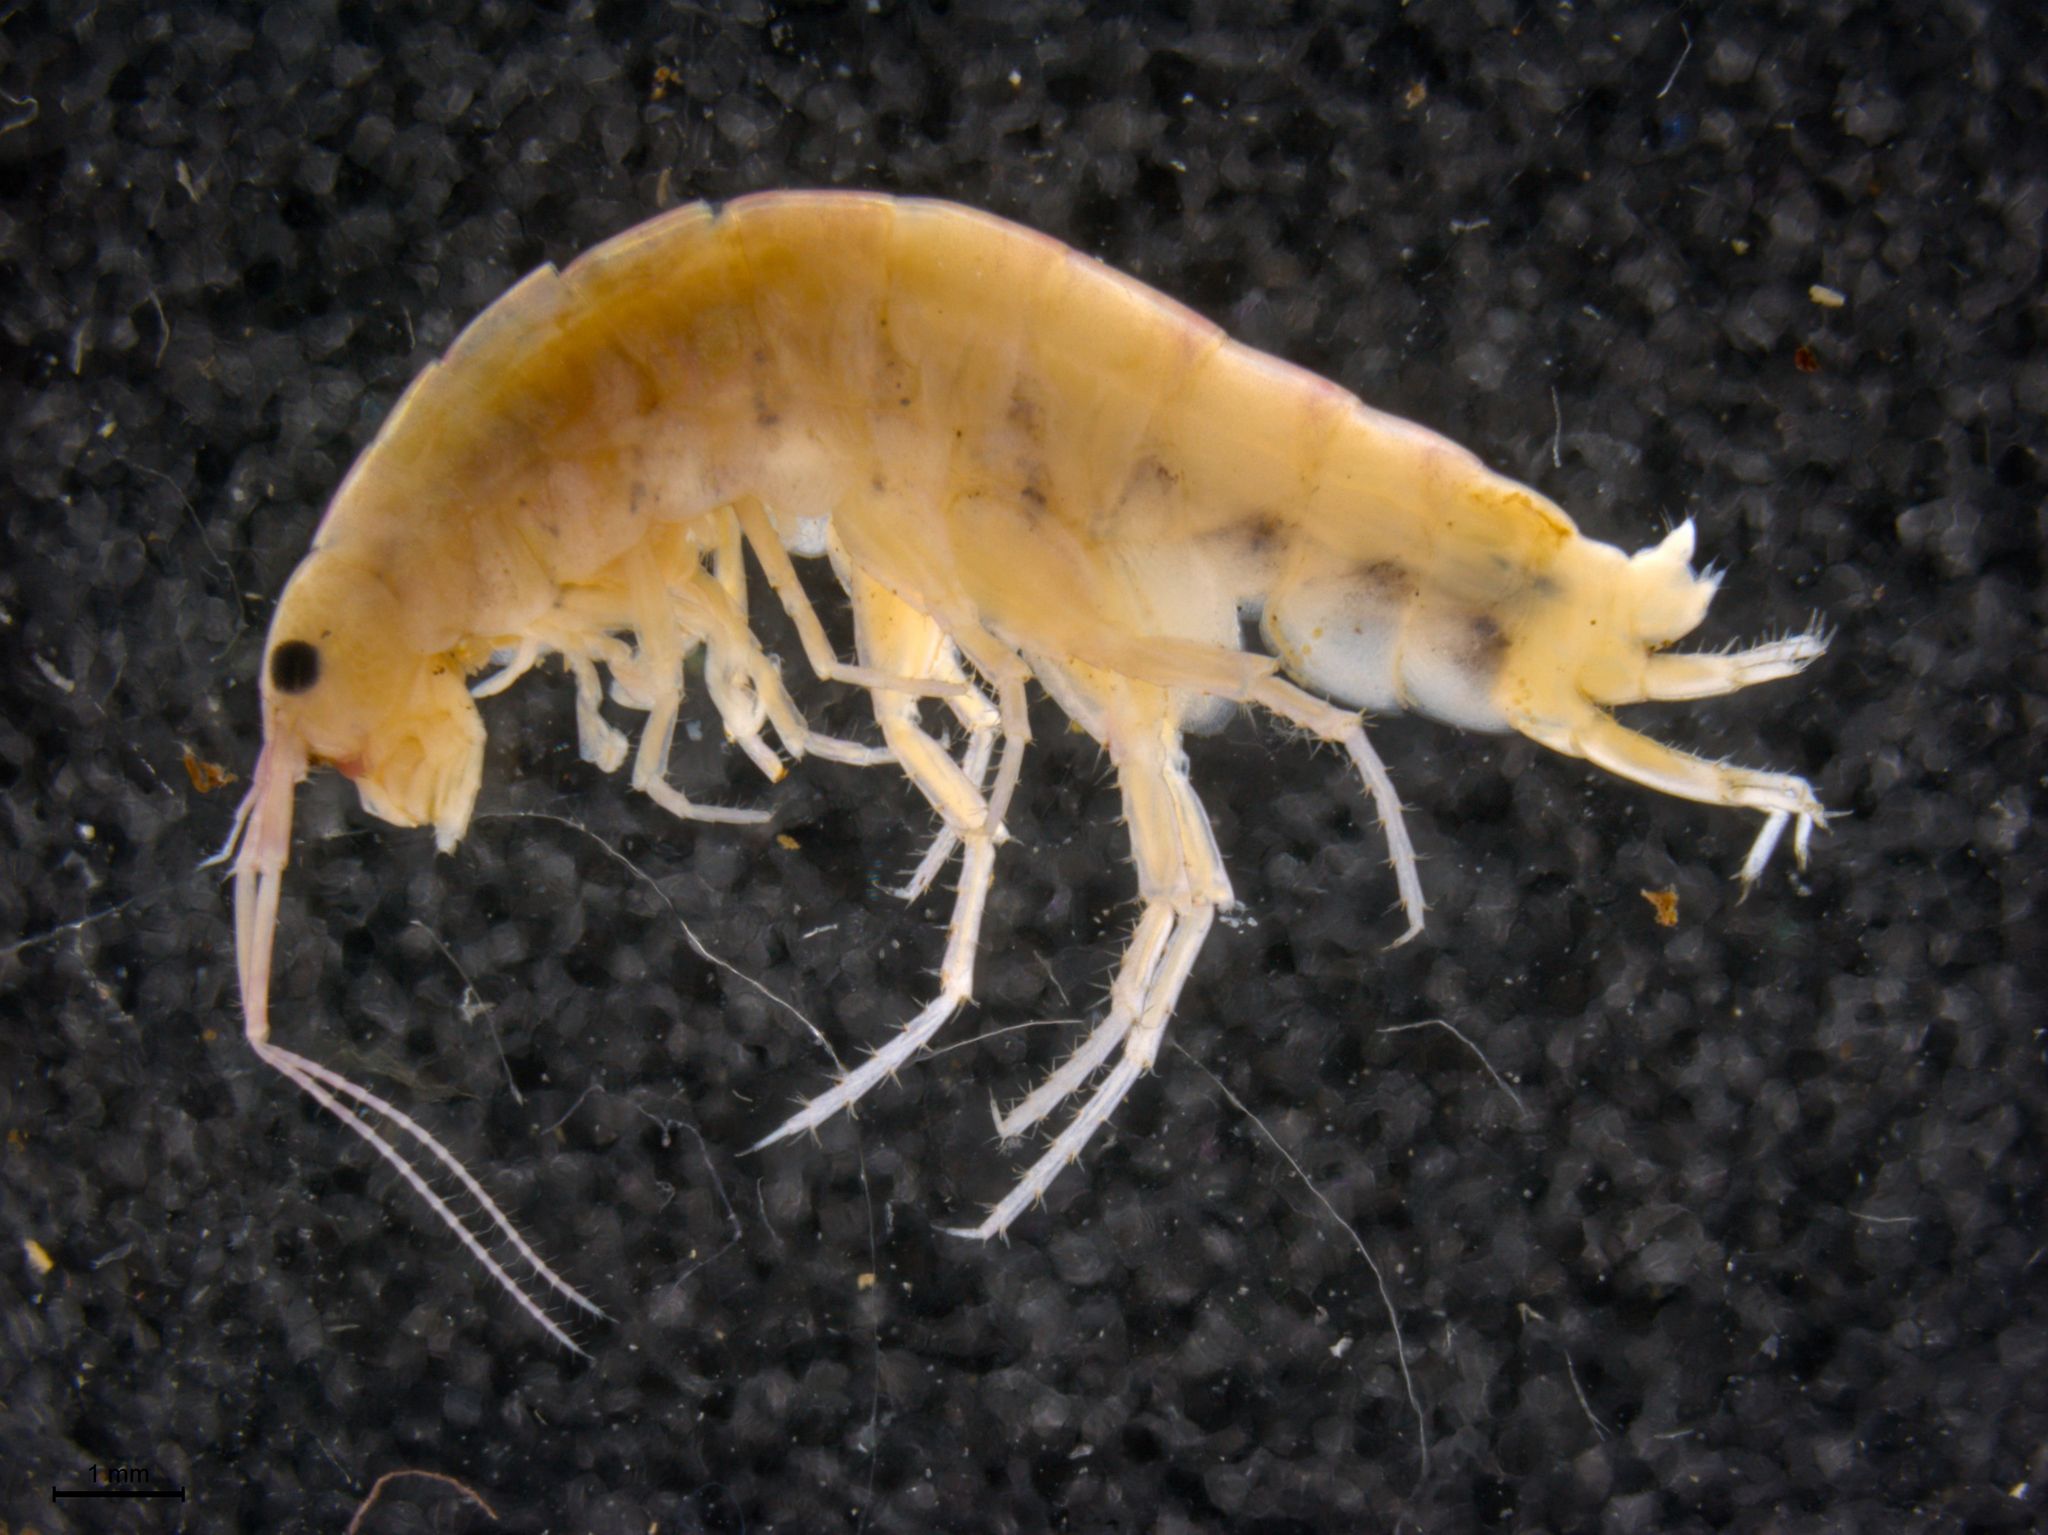 New species of shrimp